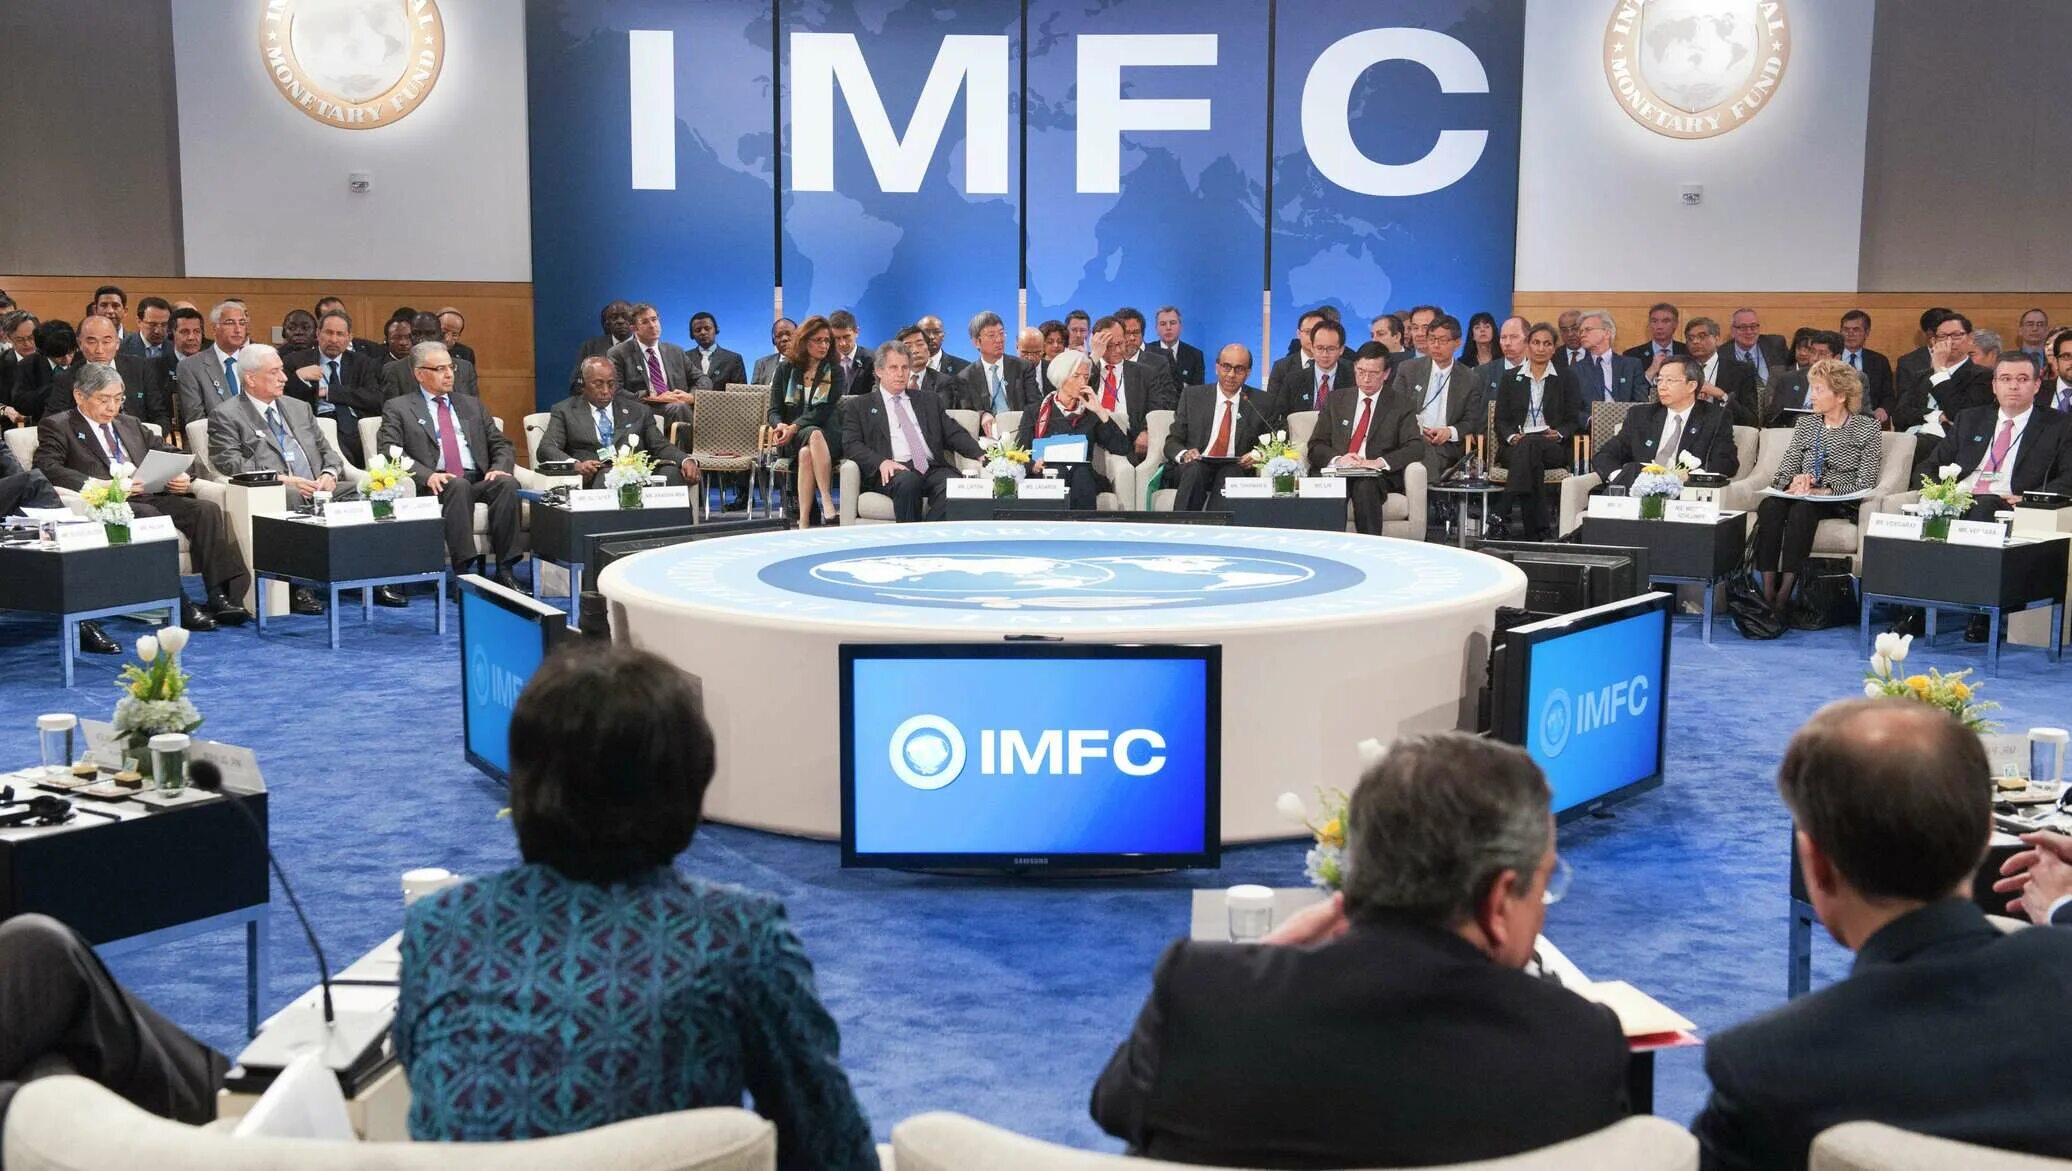 International monetary Fund (IMF). Международный валютный фонд (МВФ) - International monetary Fund (IMF). Совет директоров МВФ. МВФ штаб квартира.